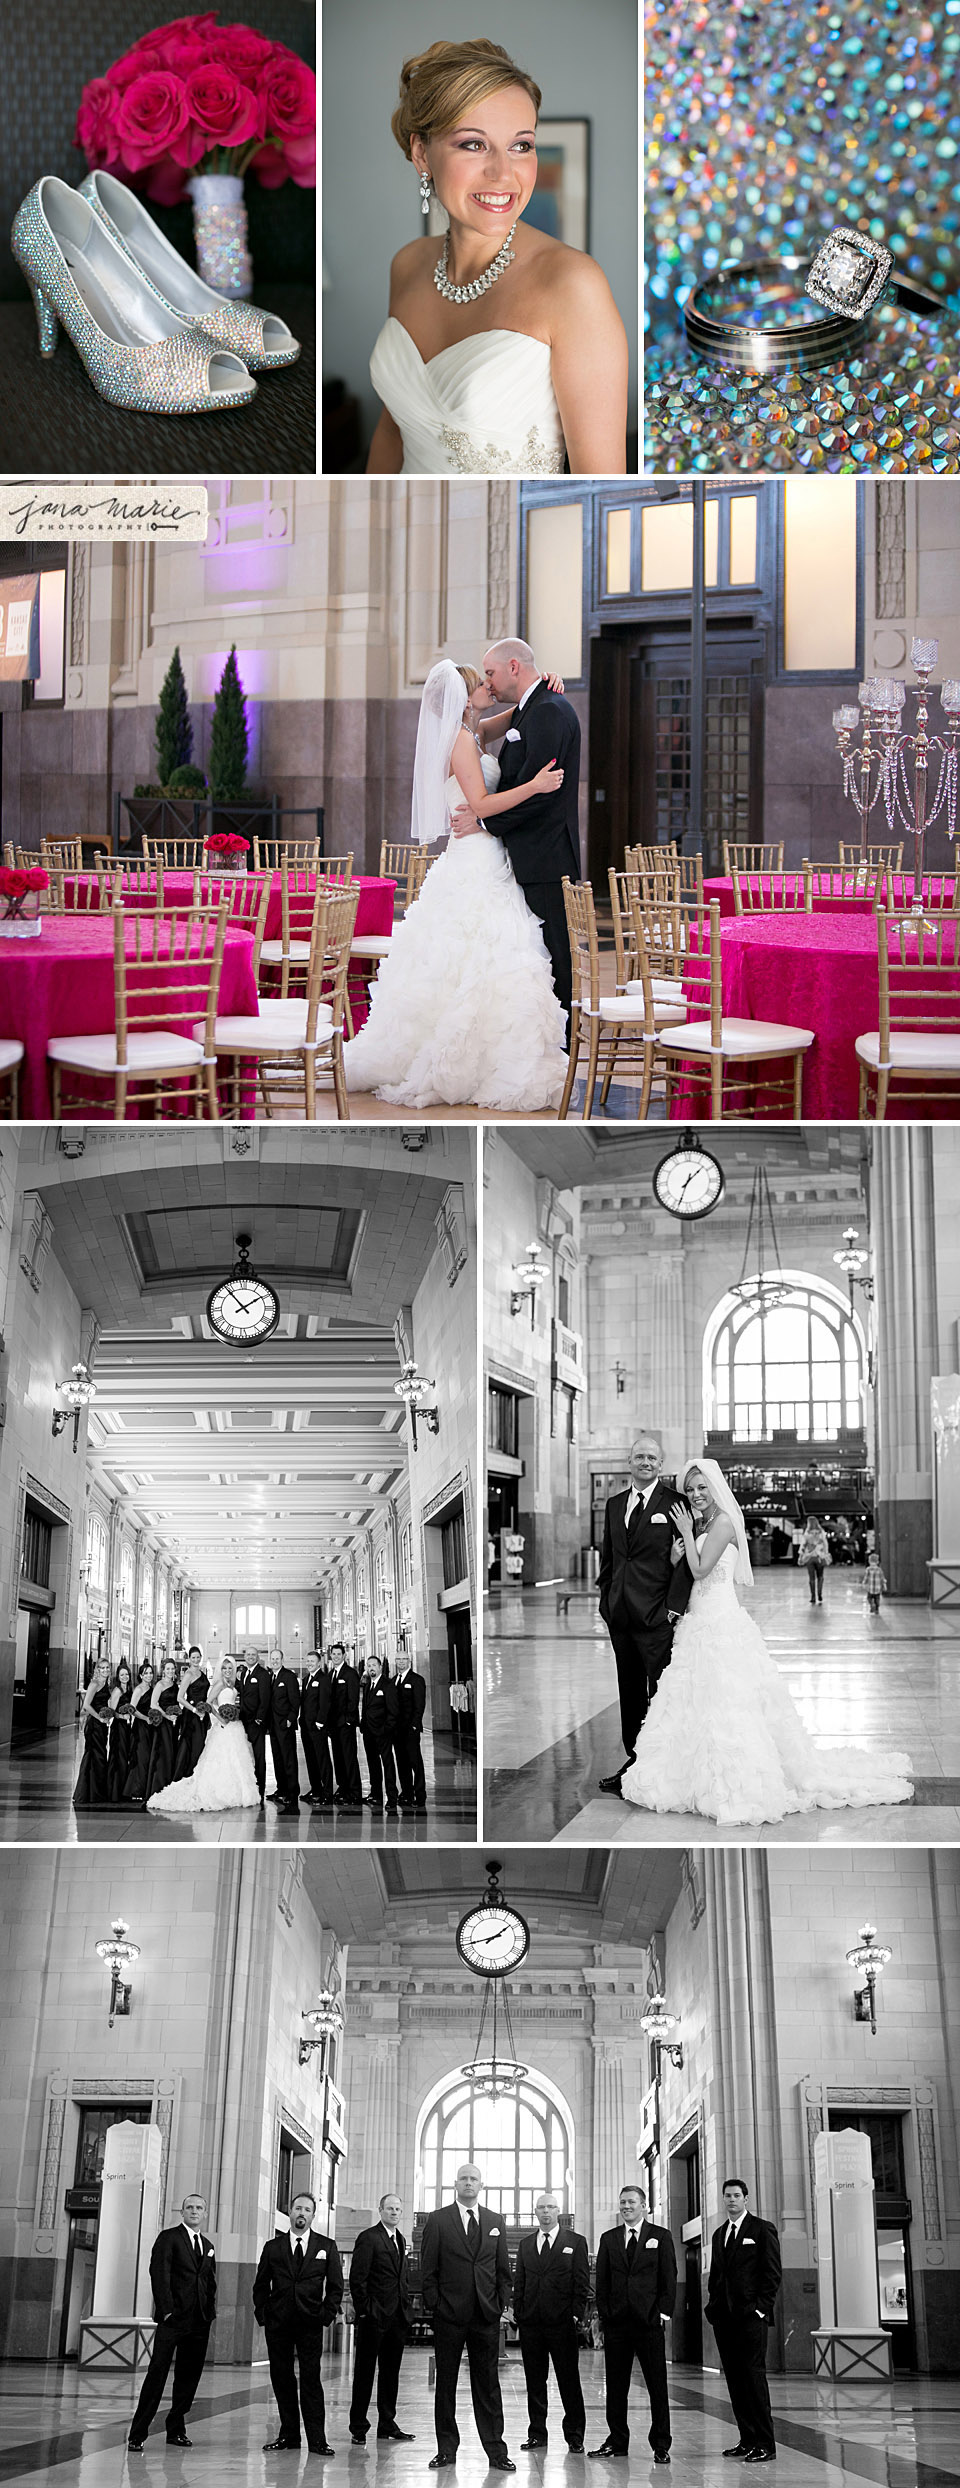 Union Station, Bridal portraits, Best Kansas City wedding photographers, Jana Marler, First site, getting ready